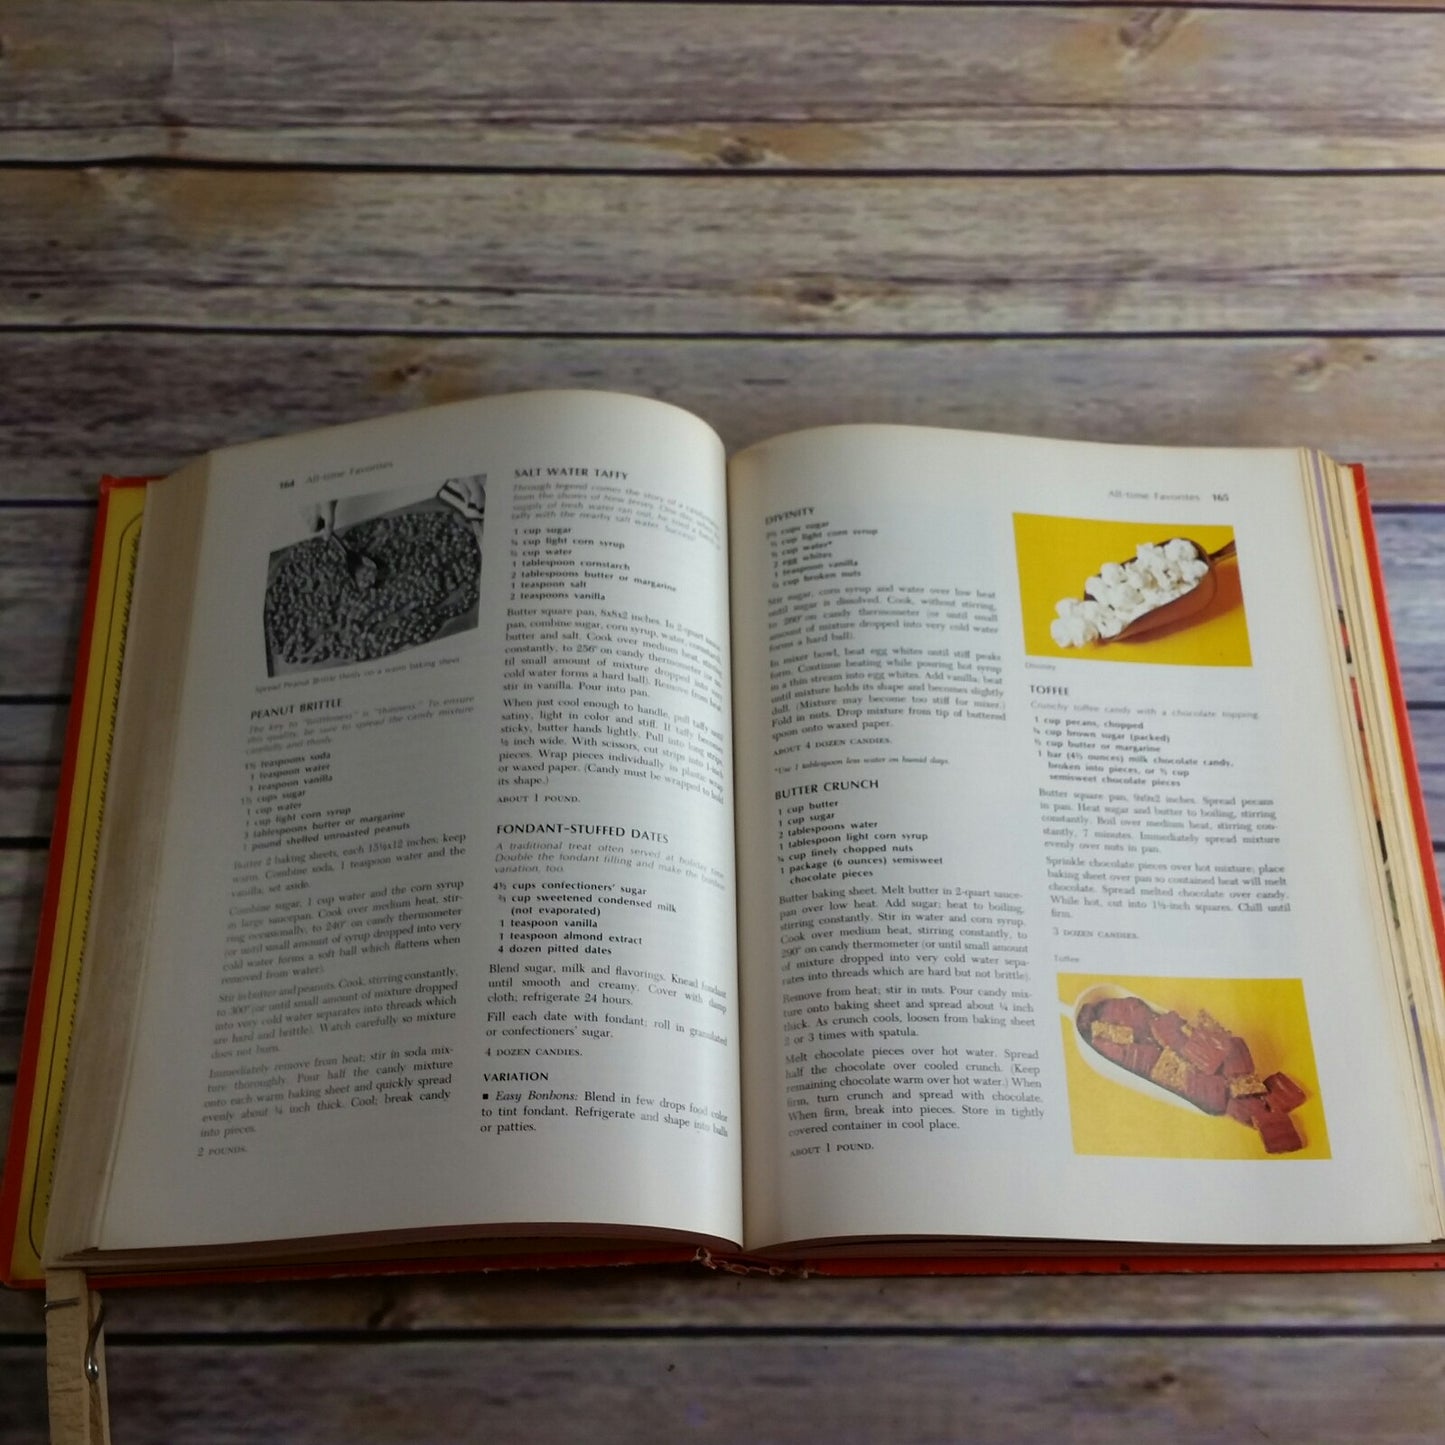 Vintage Cookbook Betty Crocker Red Pie Cover 1973 Recipes Cook Book Hardcover Golden Press